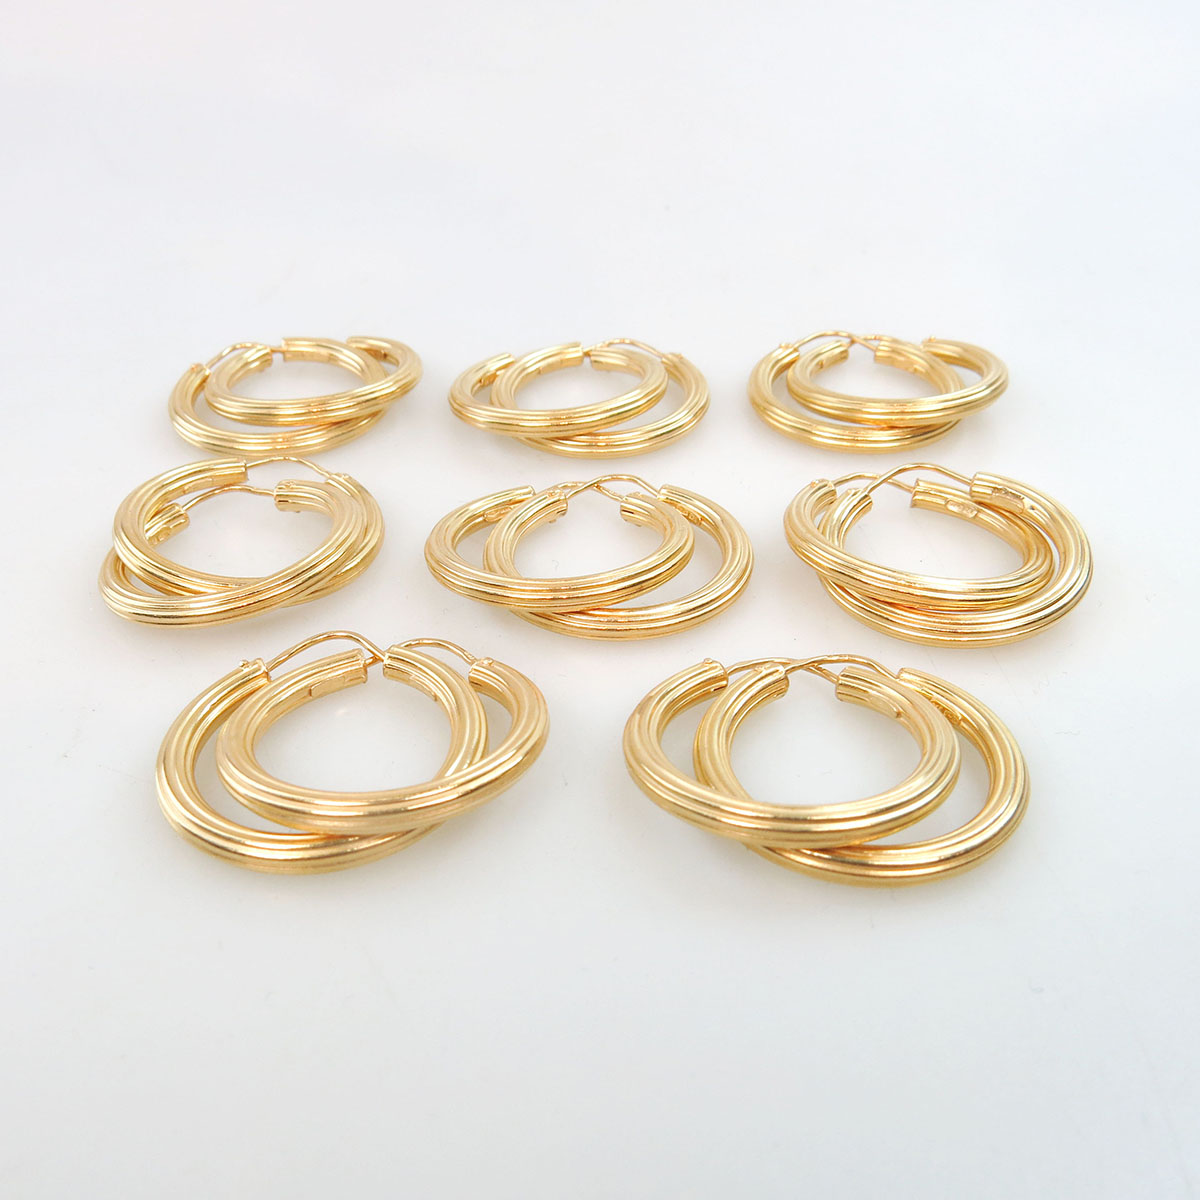 8 Pairs Of Italian 18k Yellow Gold Hoop Earrings